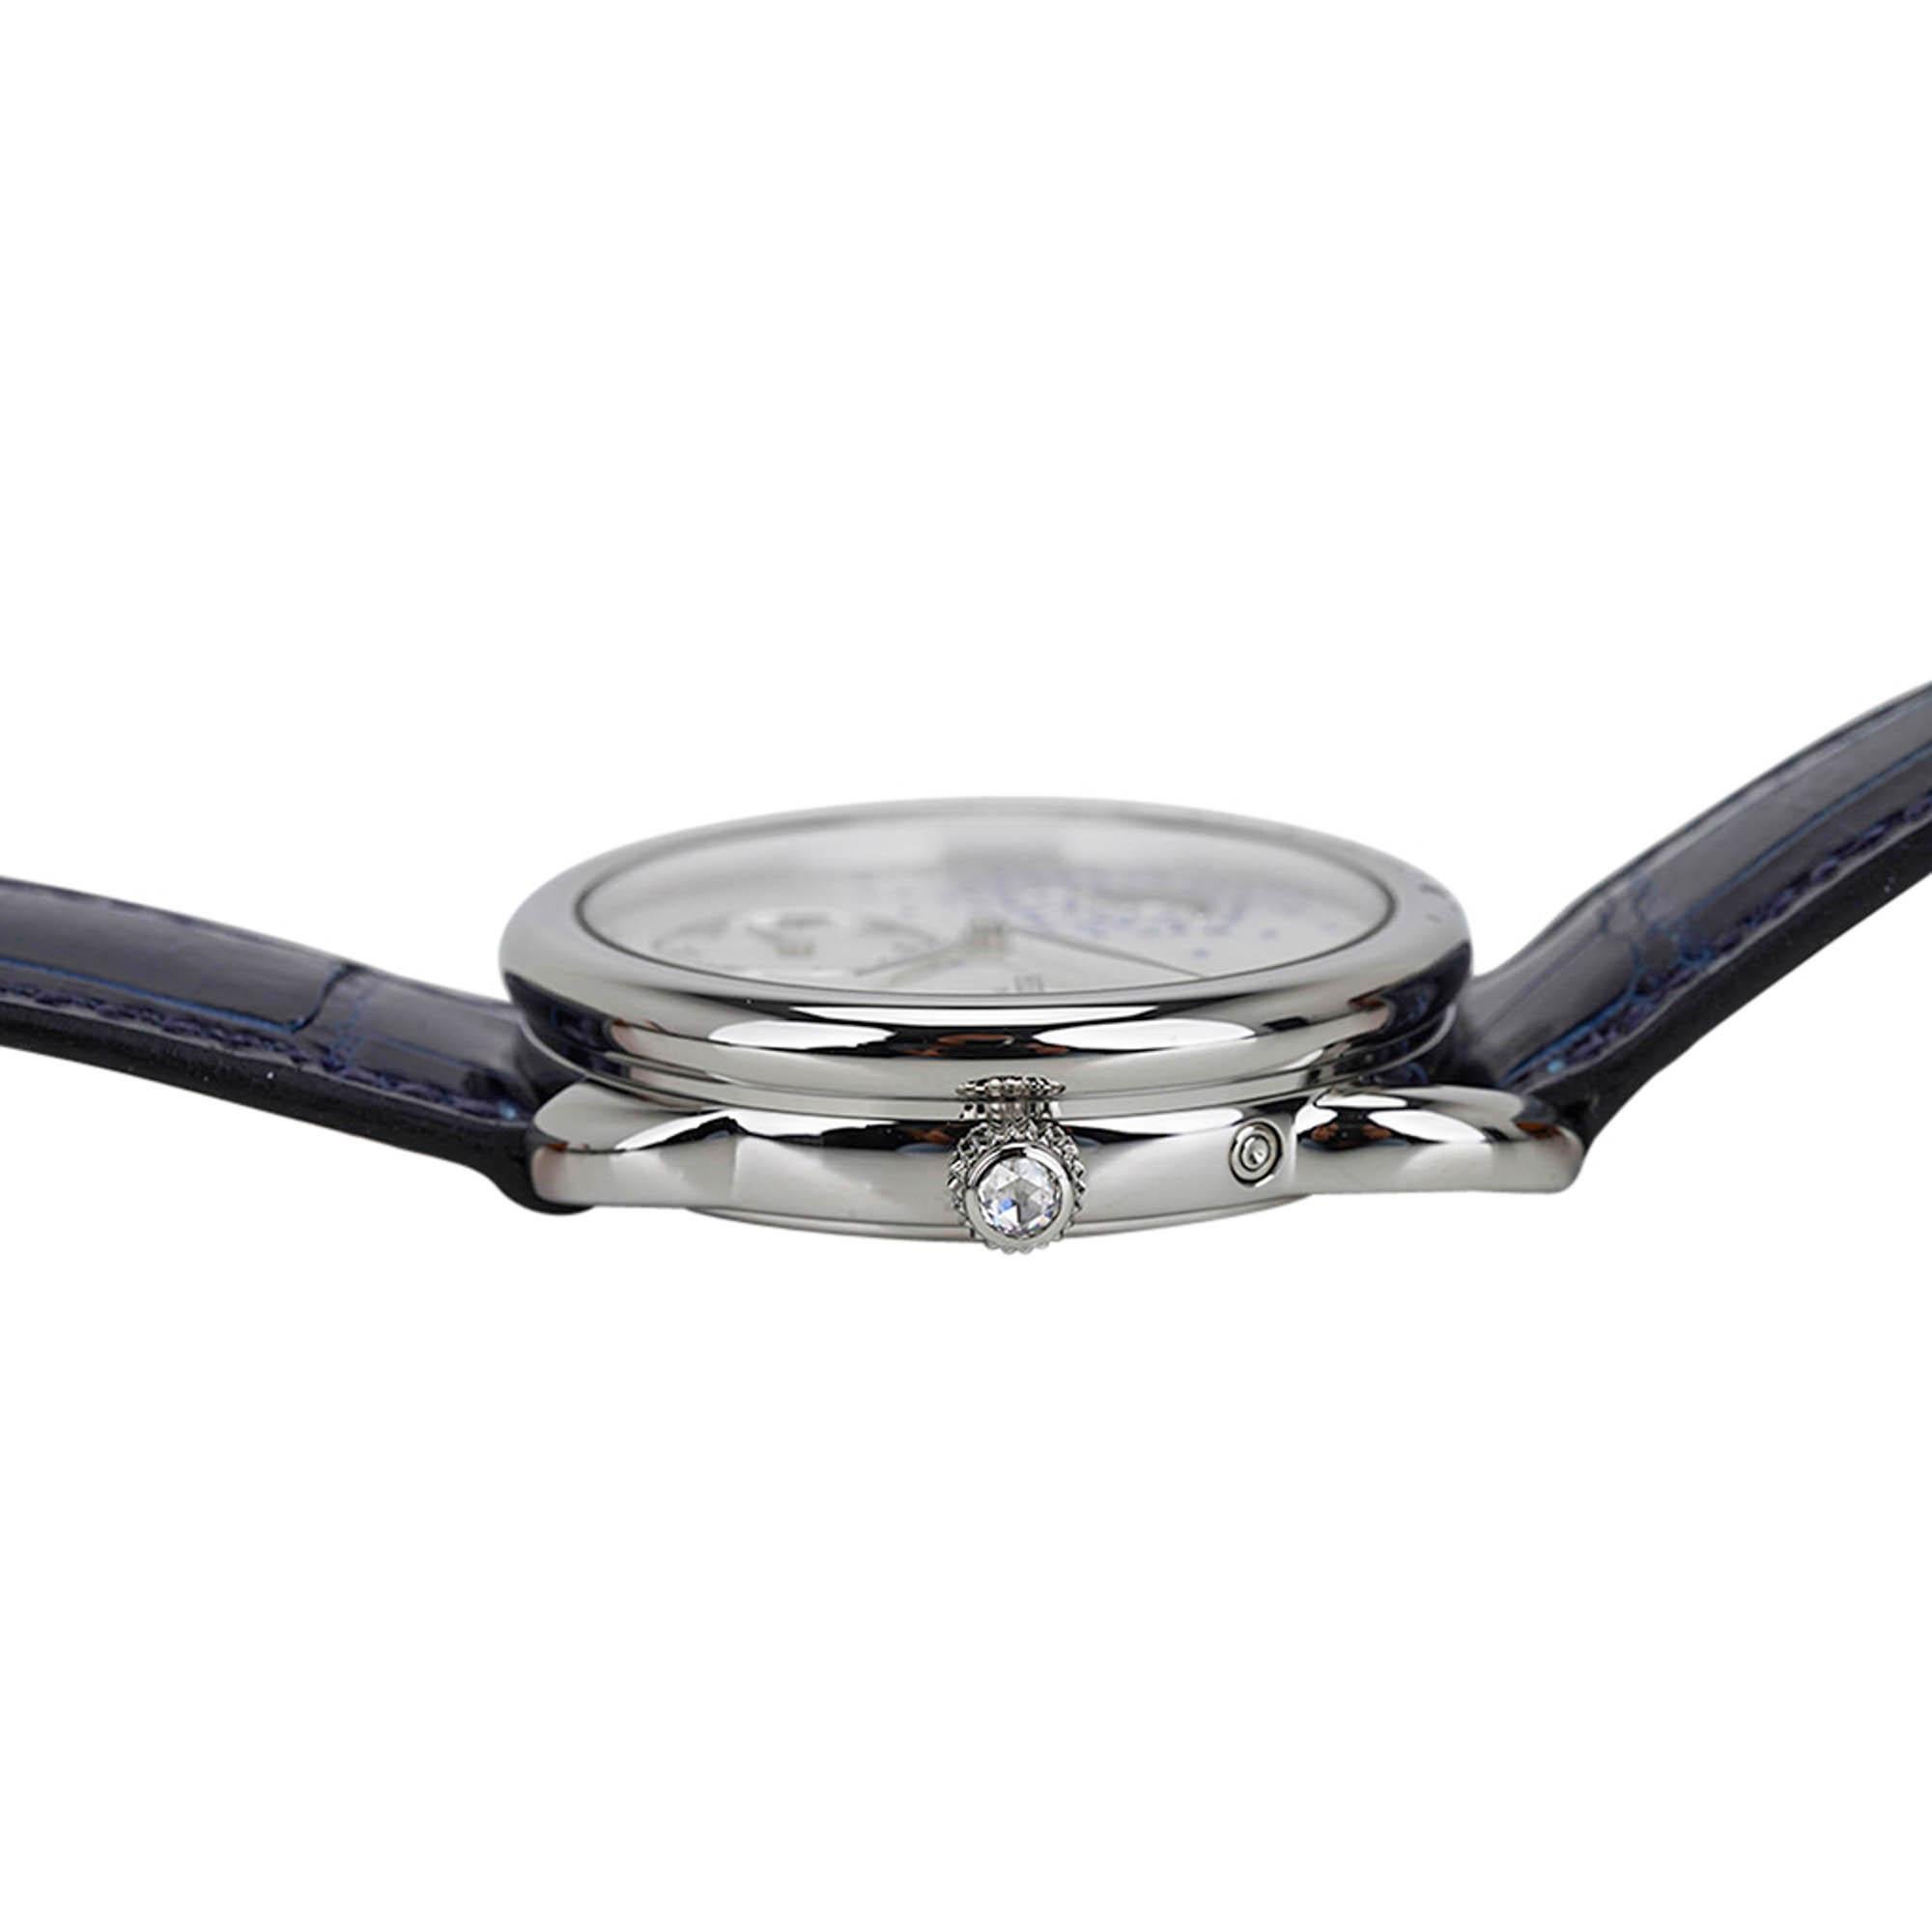 Hermes Uhr Arceau Petite Lune Großes Modell 38 mm Mondphase Saphire Diamanten im Angebot 8